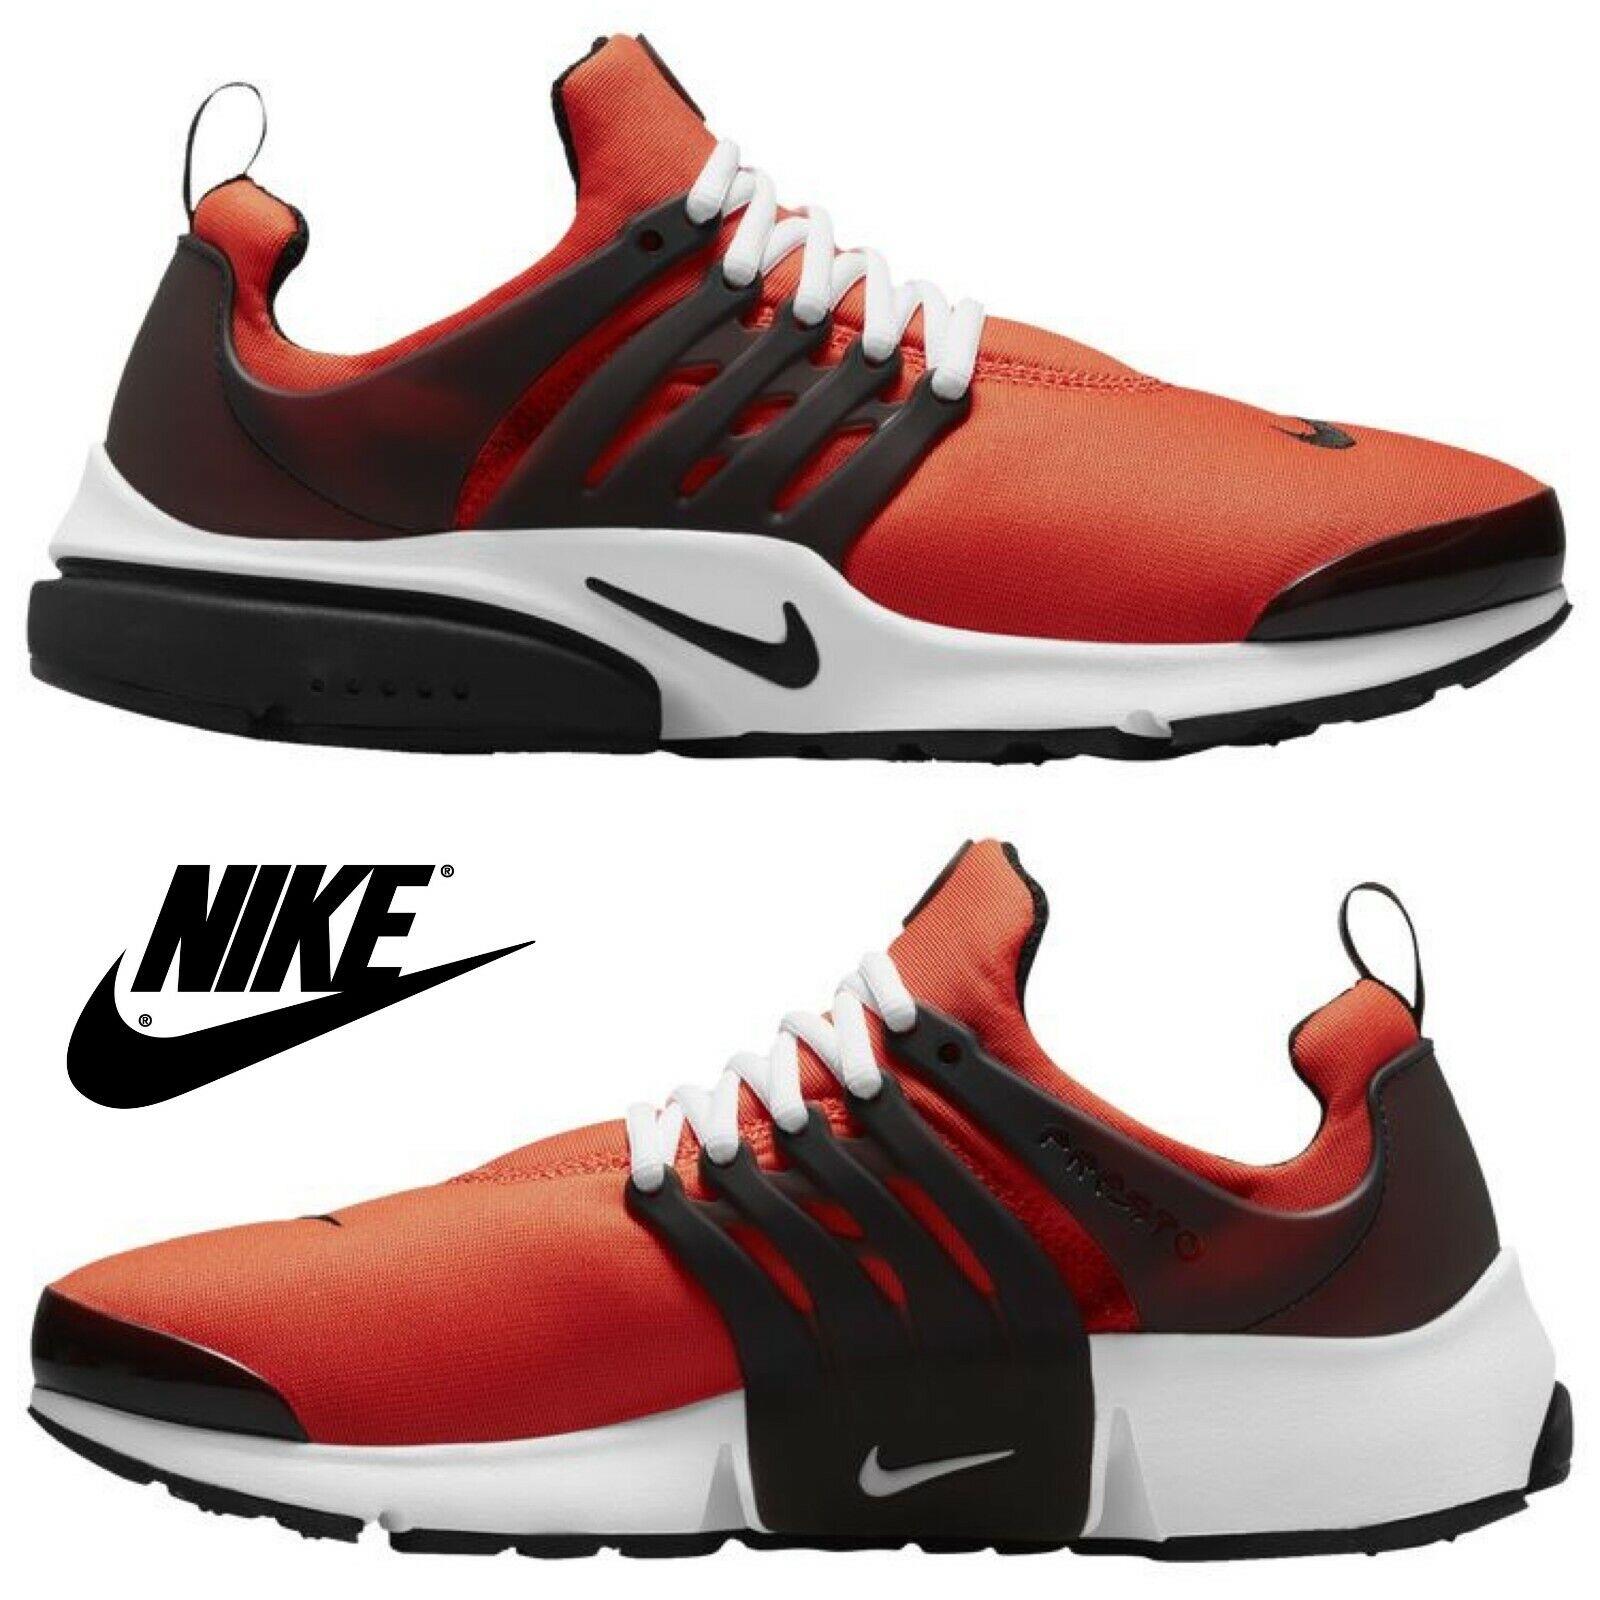 Nike Air Presto Running Sneakers Mens Athletic Comfort Casual Shoes Black Orange - Black , Orange/Black/White Manufacturer